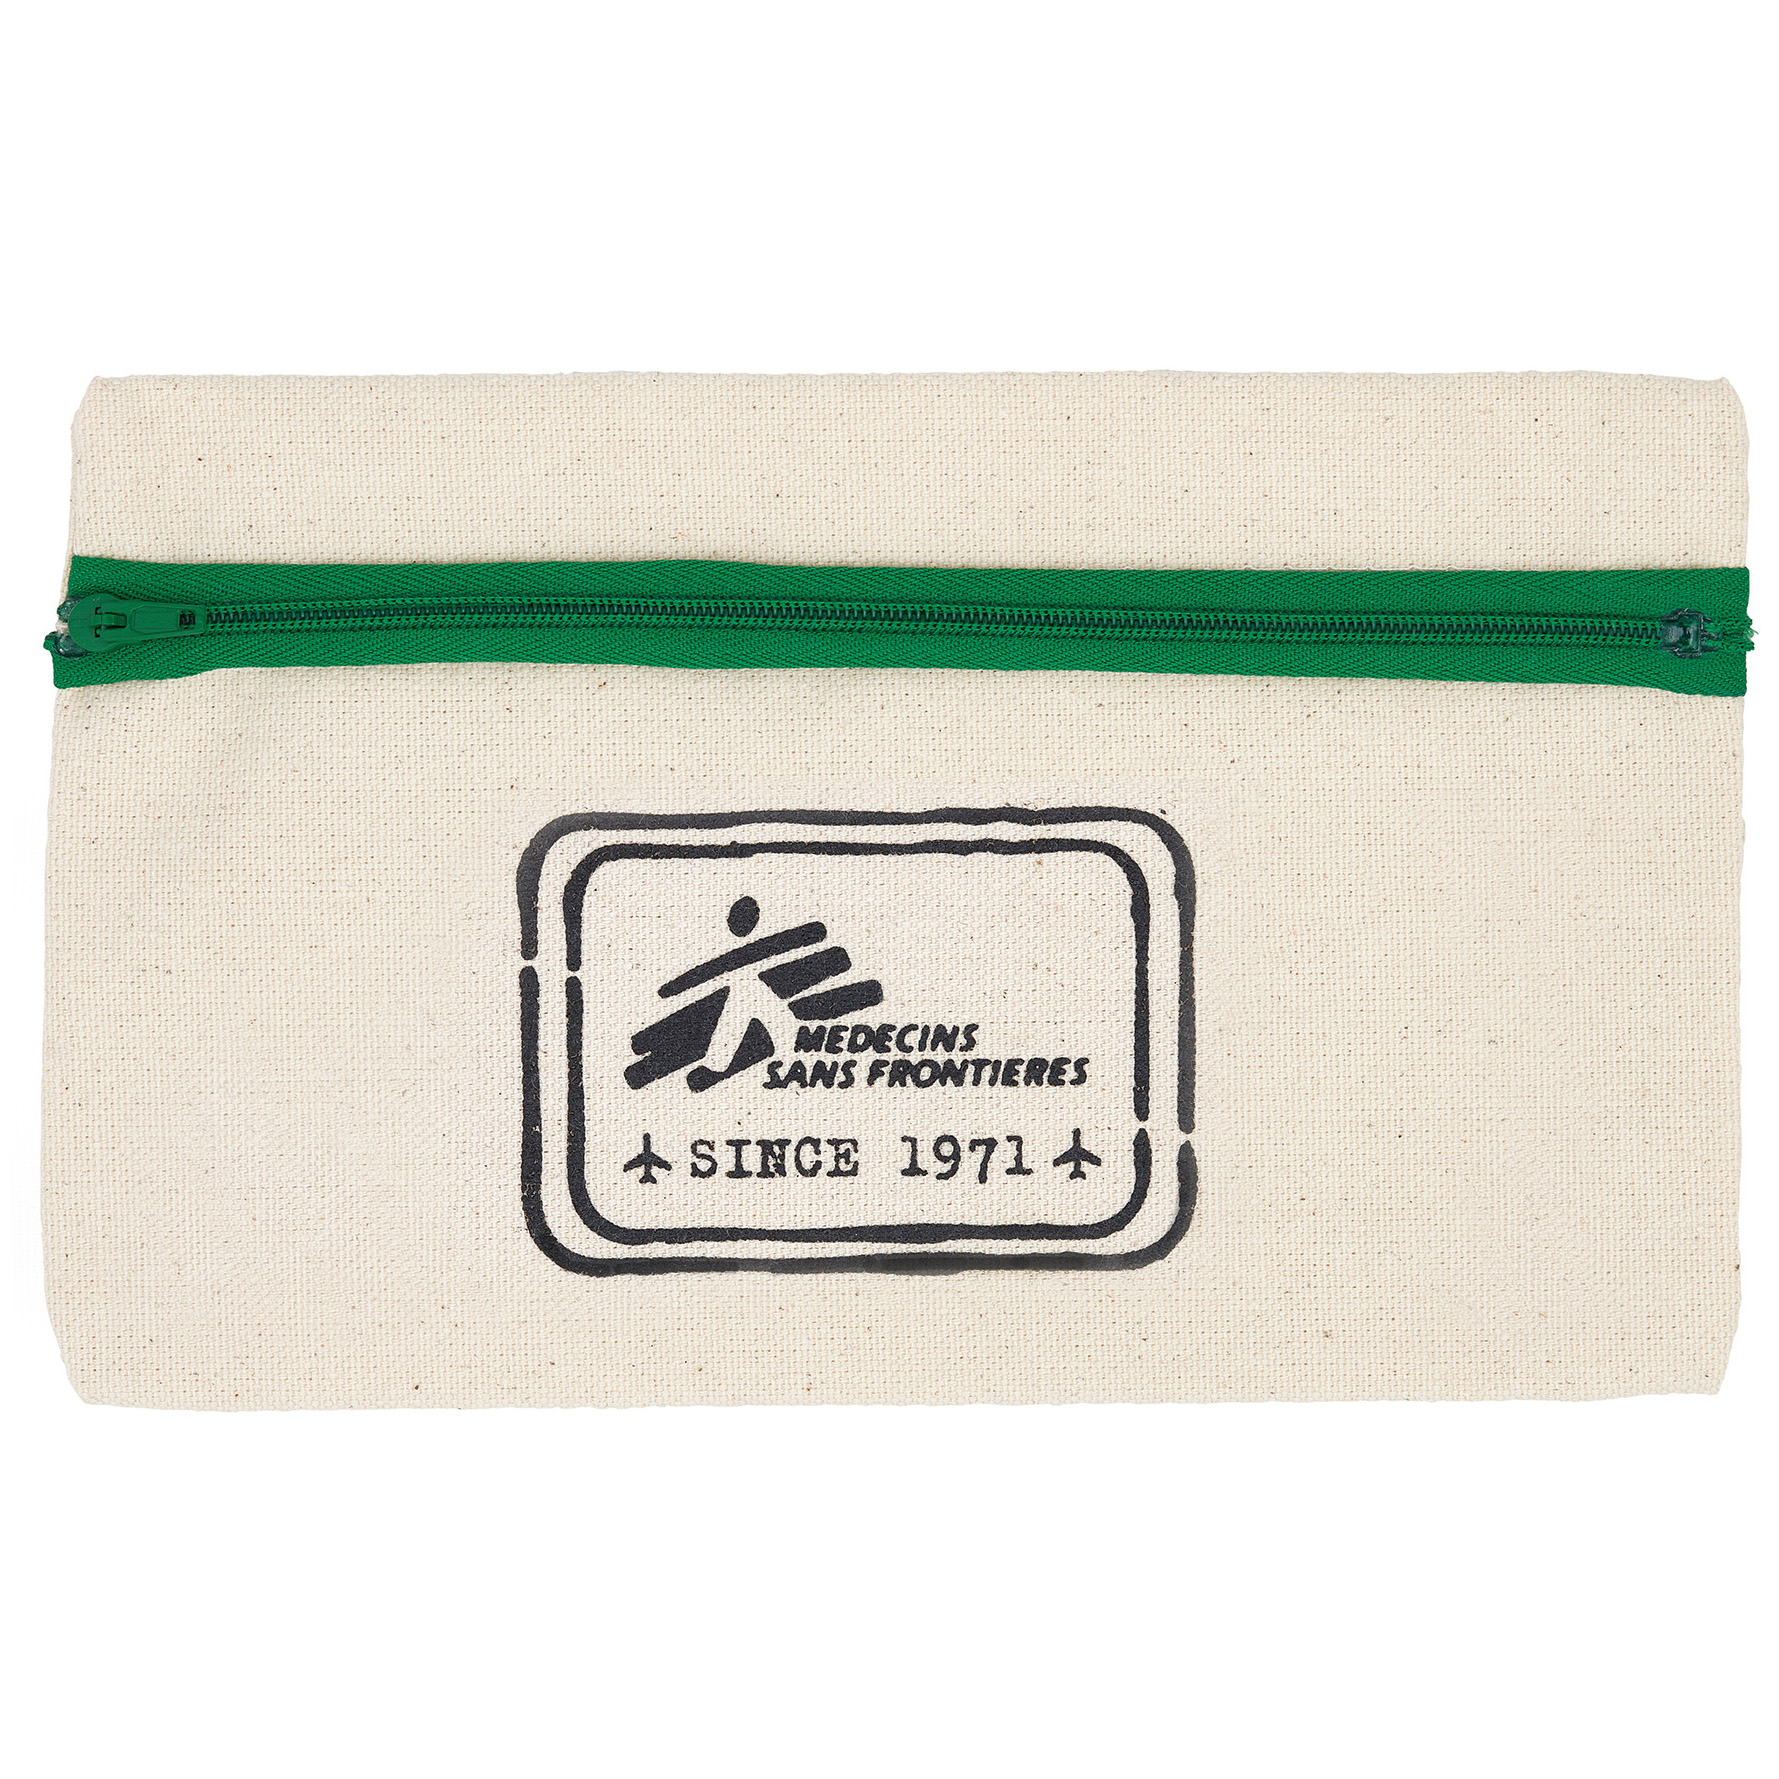 Branded Organic Cotton Pencil Cases | Total Merchandise